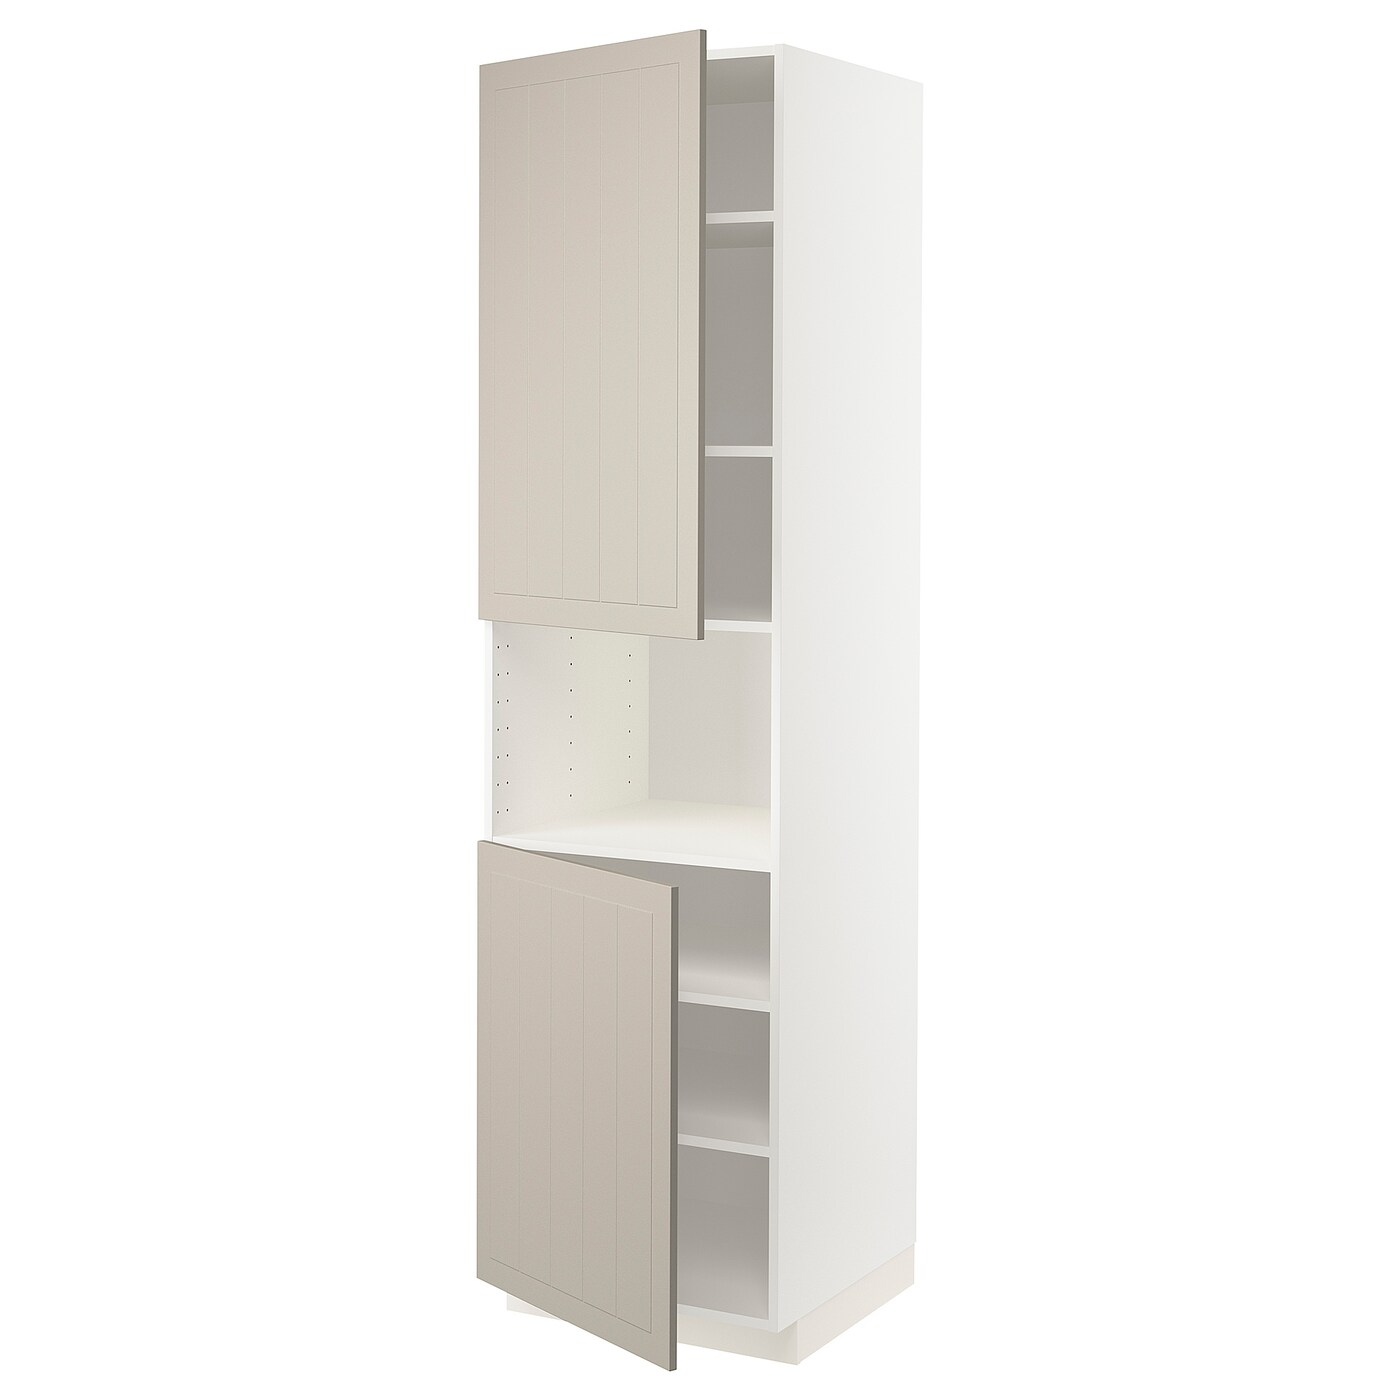 Высокий кухонный шкаф с полками - IKEA METOD/МЕТОД ИКЕА, 220х60х60 см, белый/бежевый